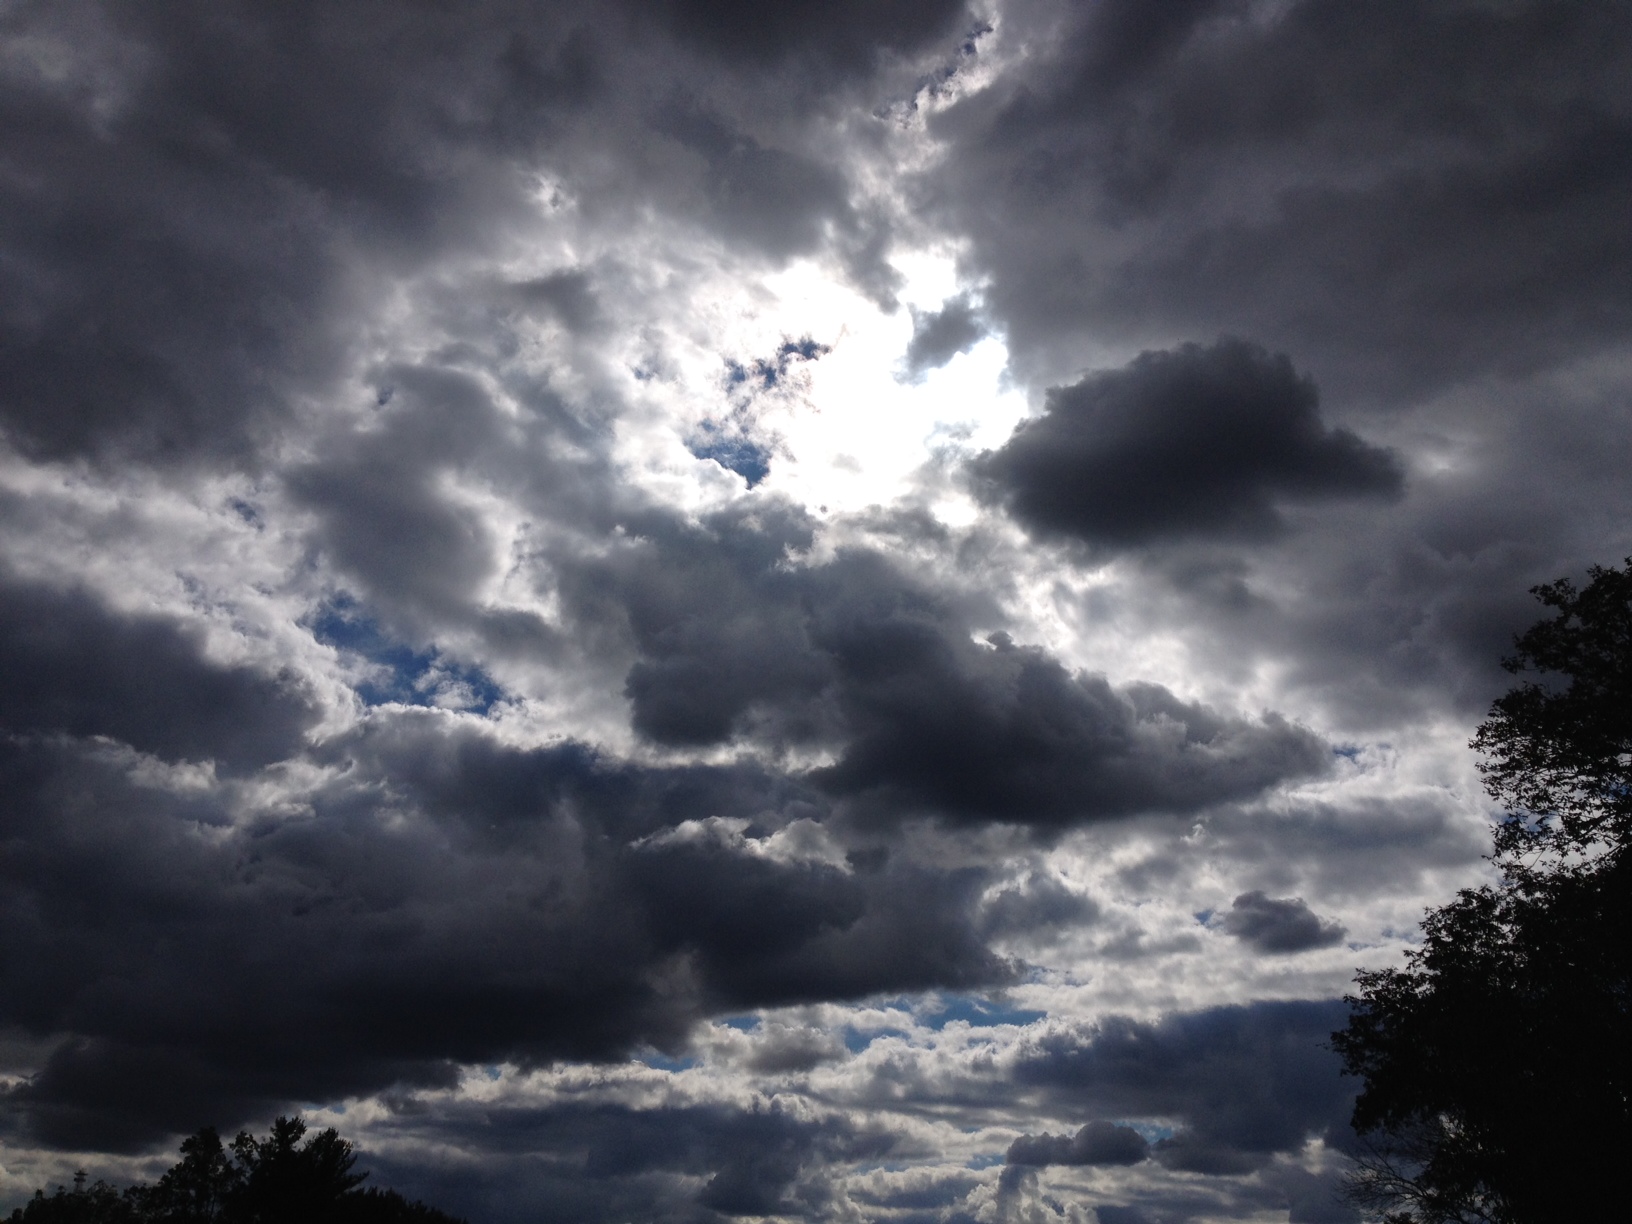 clouds-stormy-photo-by-joe-mckendrick.jpg